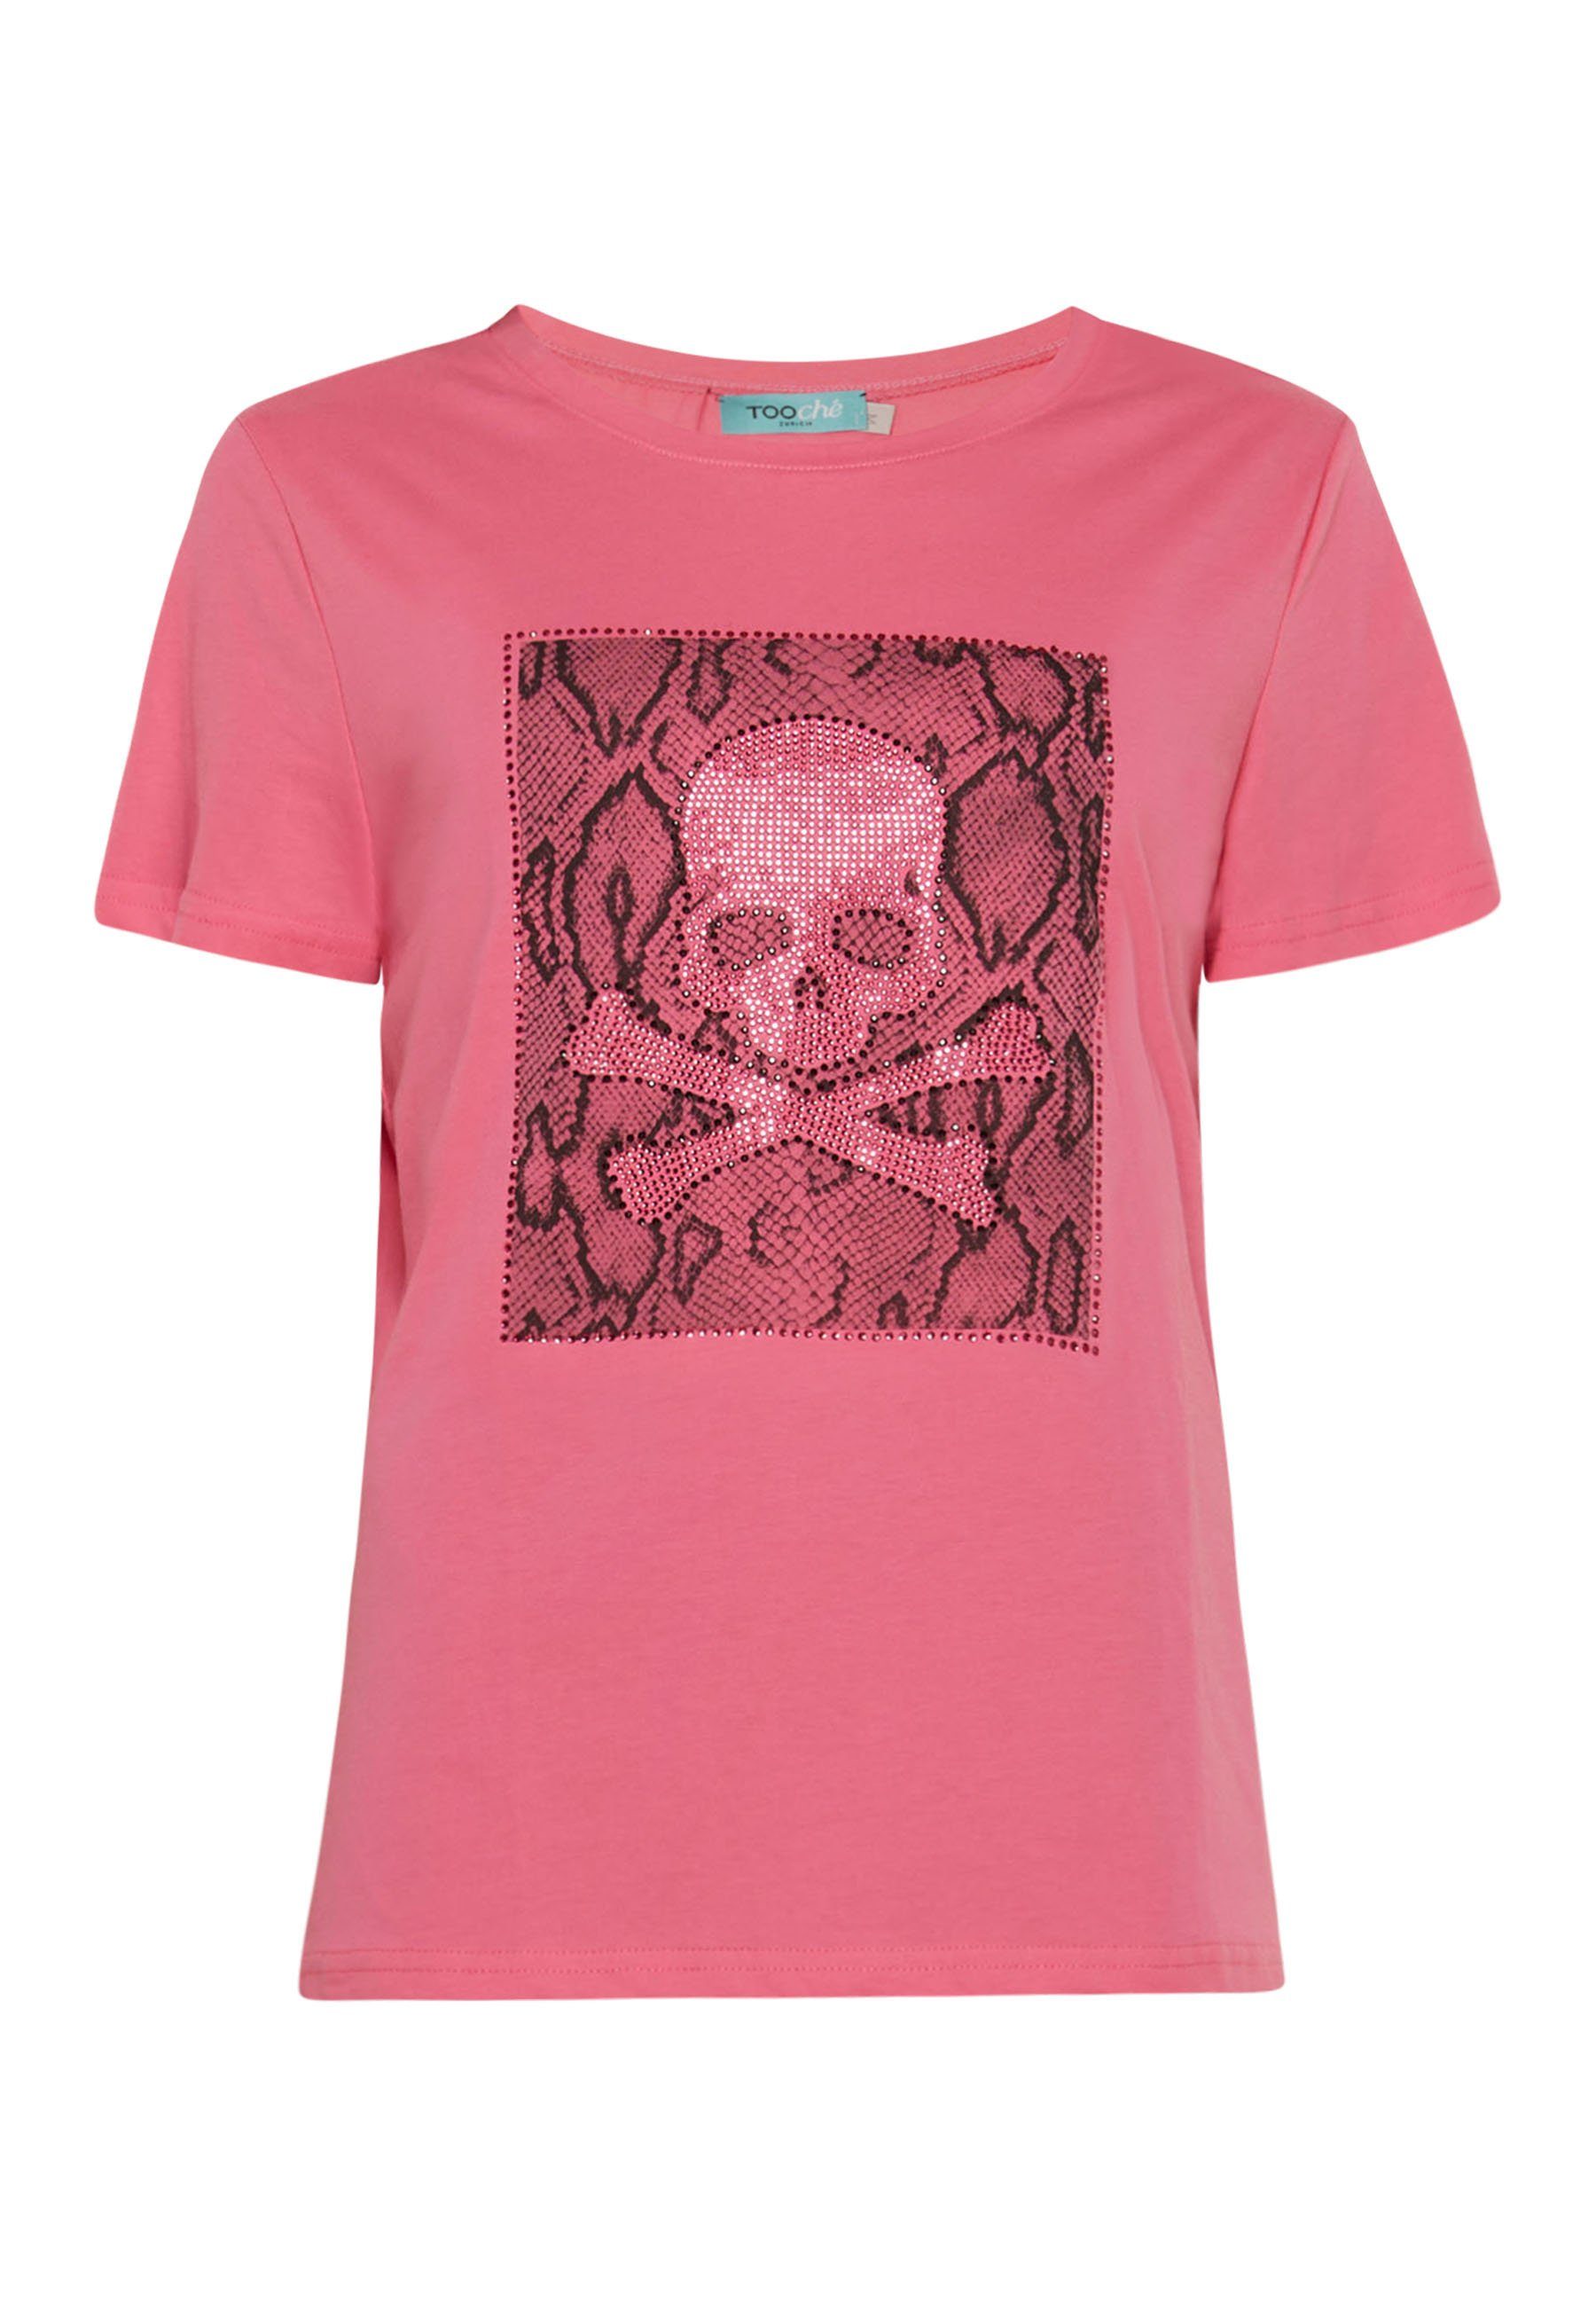 Tooche Print-Shirt T-shirt Totenkopf fuchsia